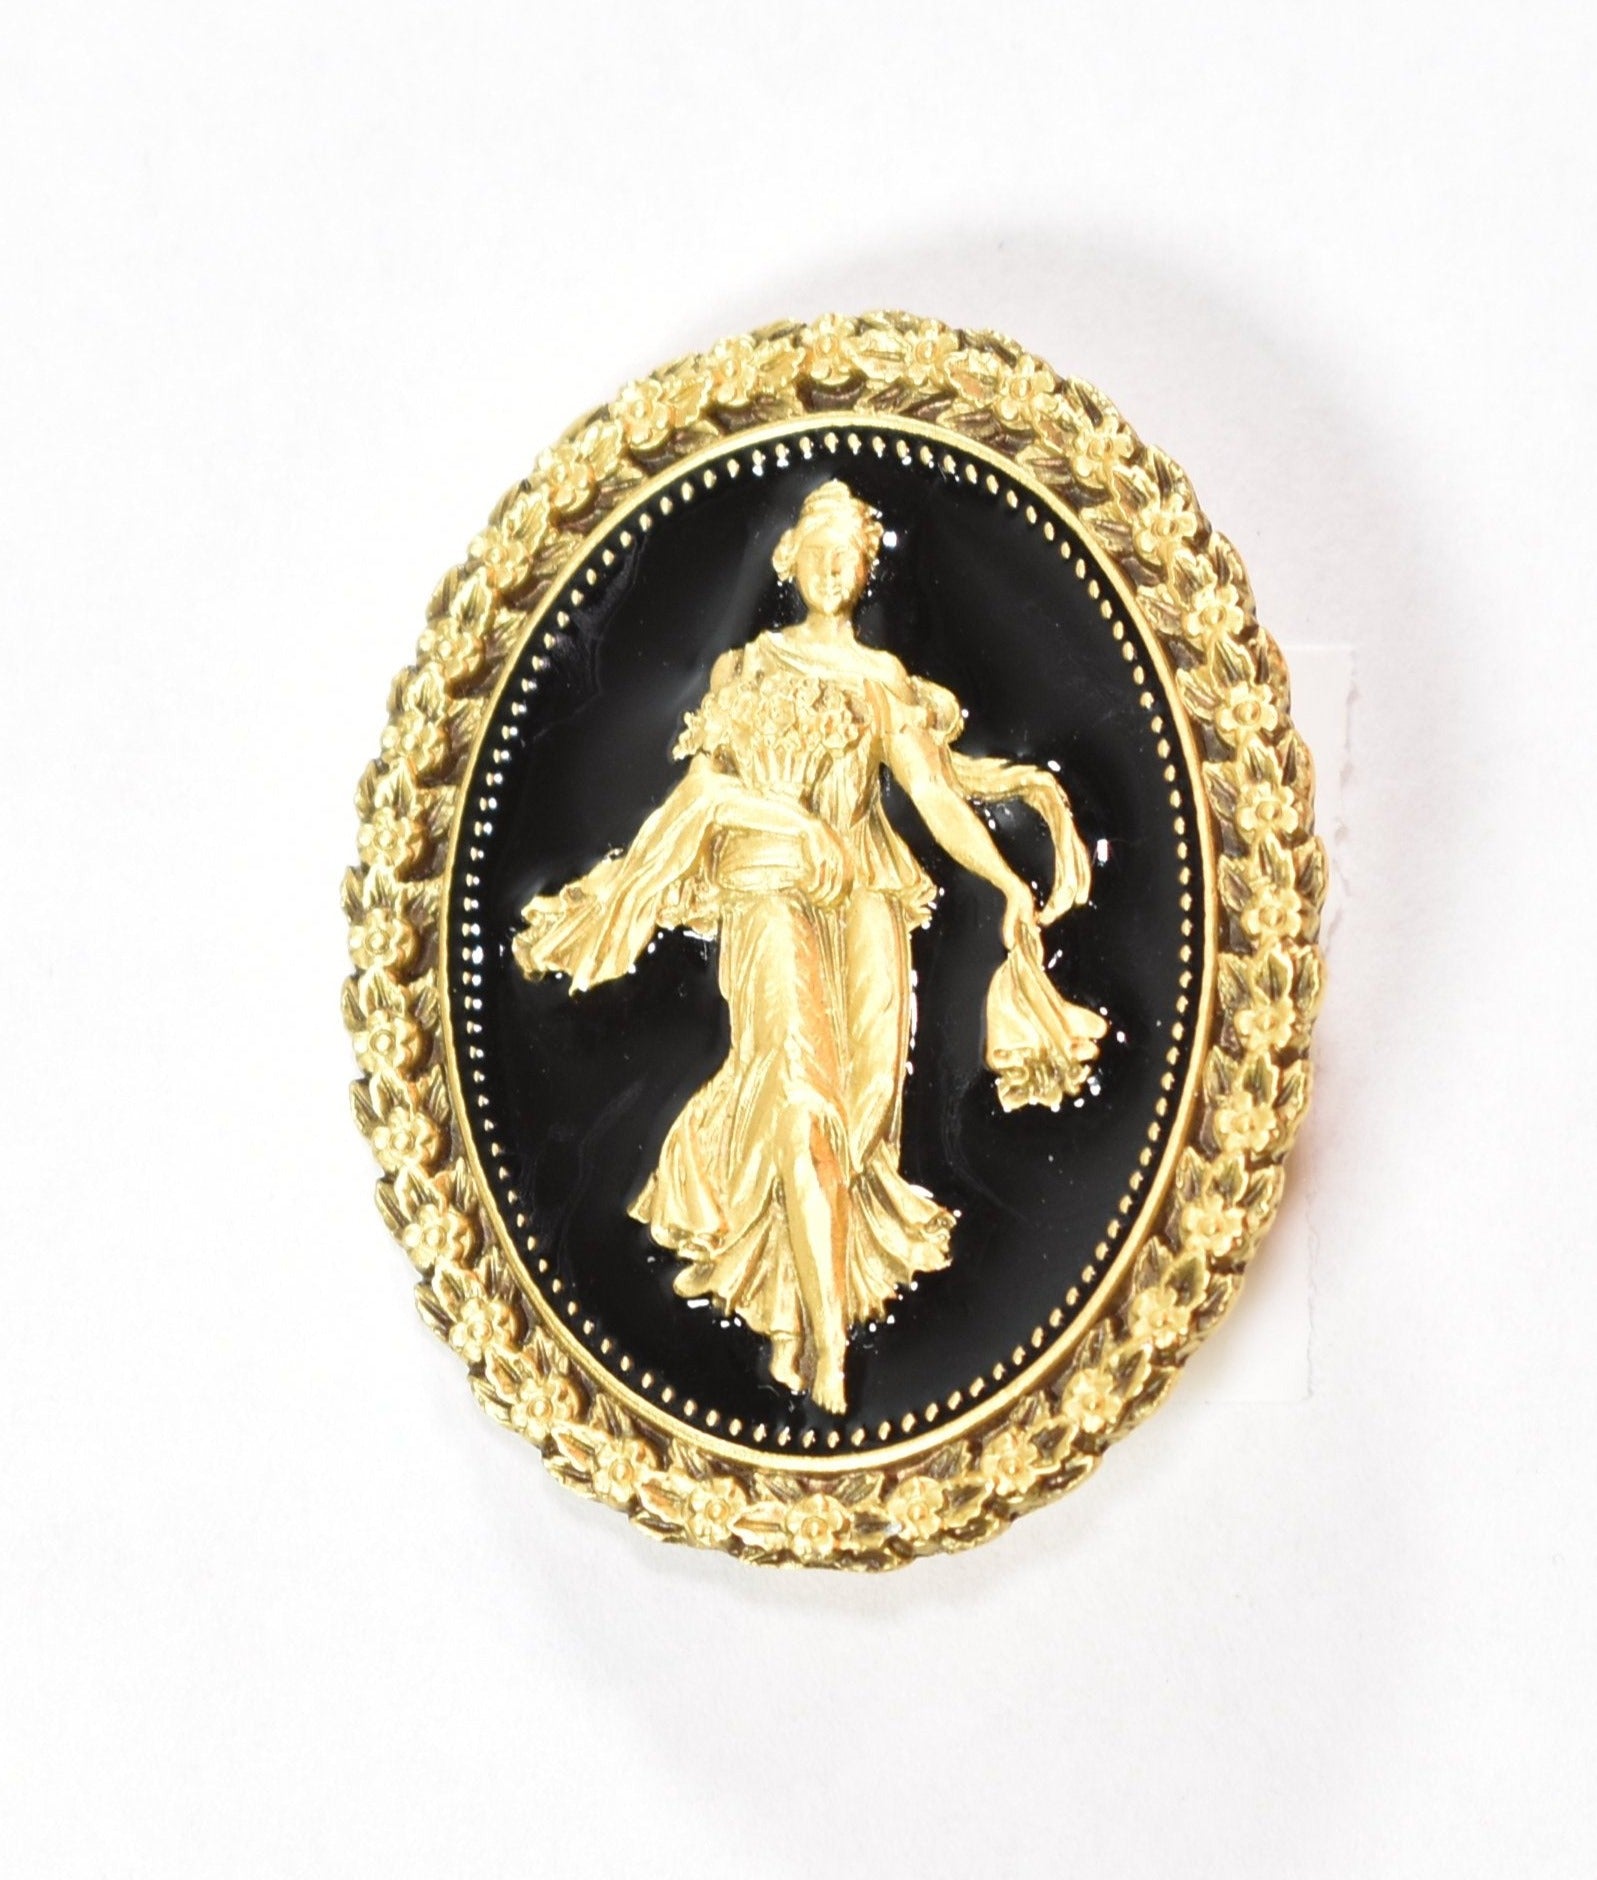 Vintage Brooch Pin Gold and black SPNEA 1 and half inch Decretive pin Victorian